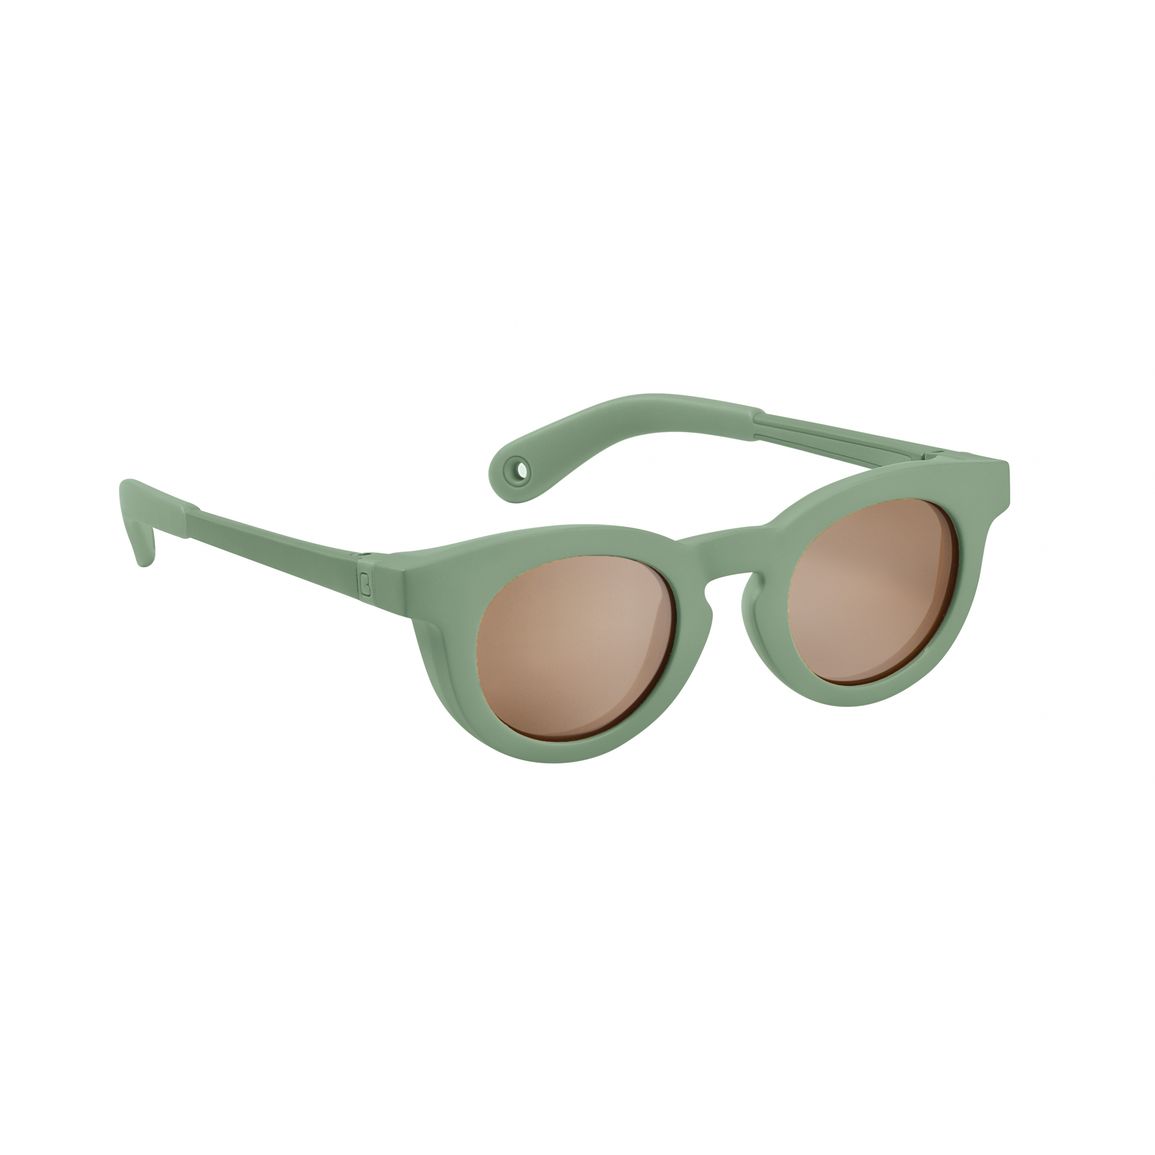 Slnečné okuliare Delight 9-24m Sage Green